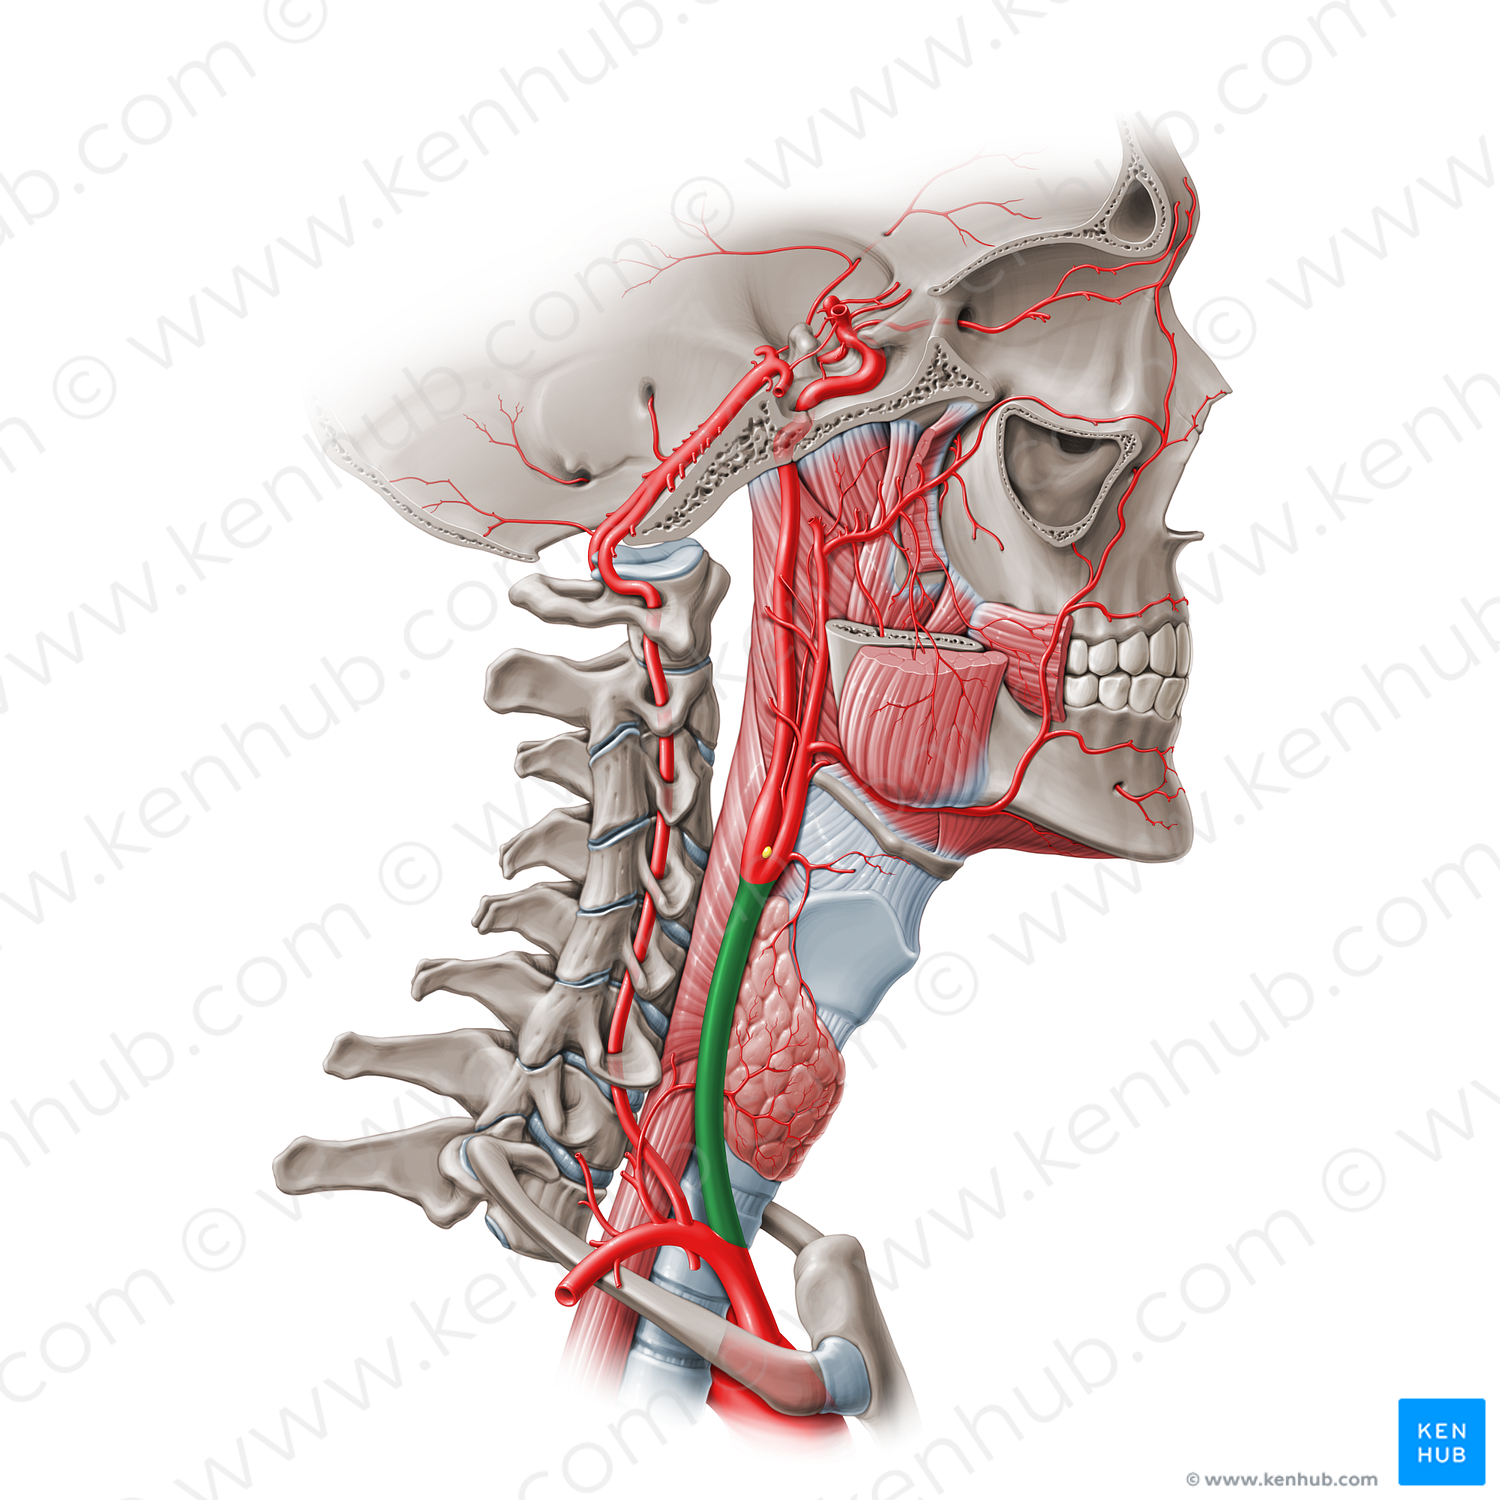 Common carotid artery (#935)